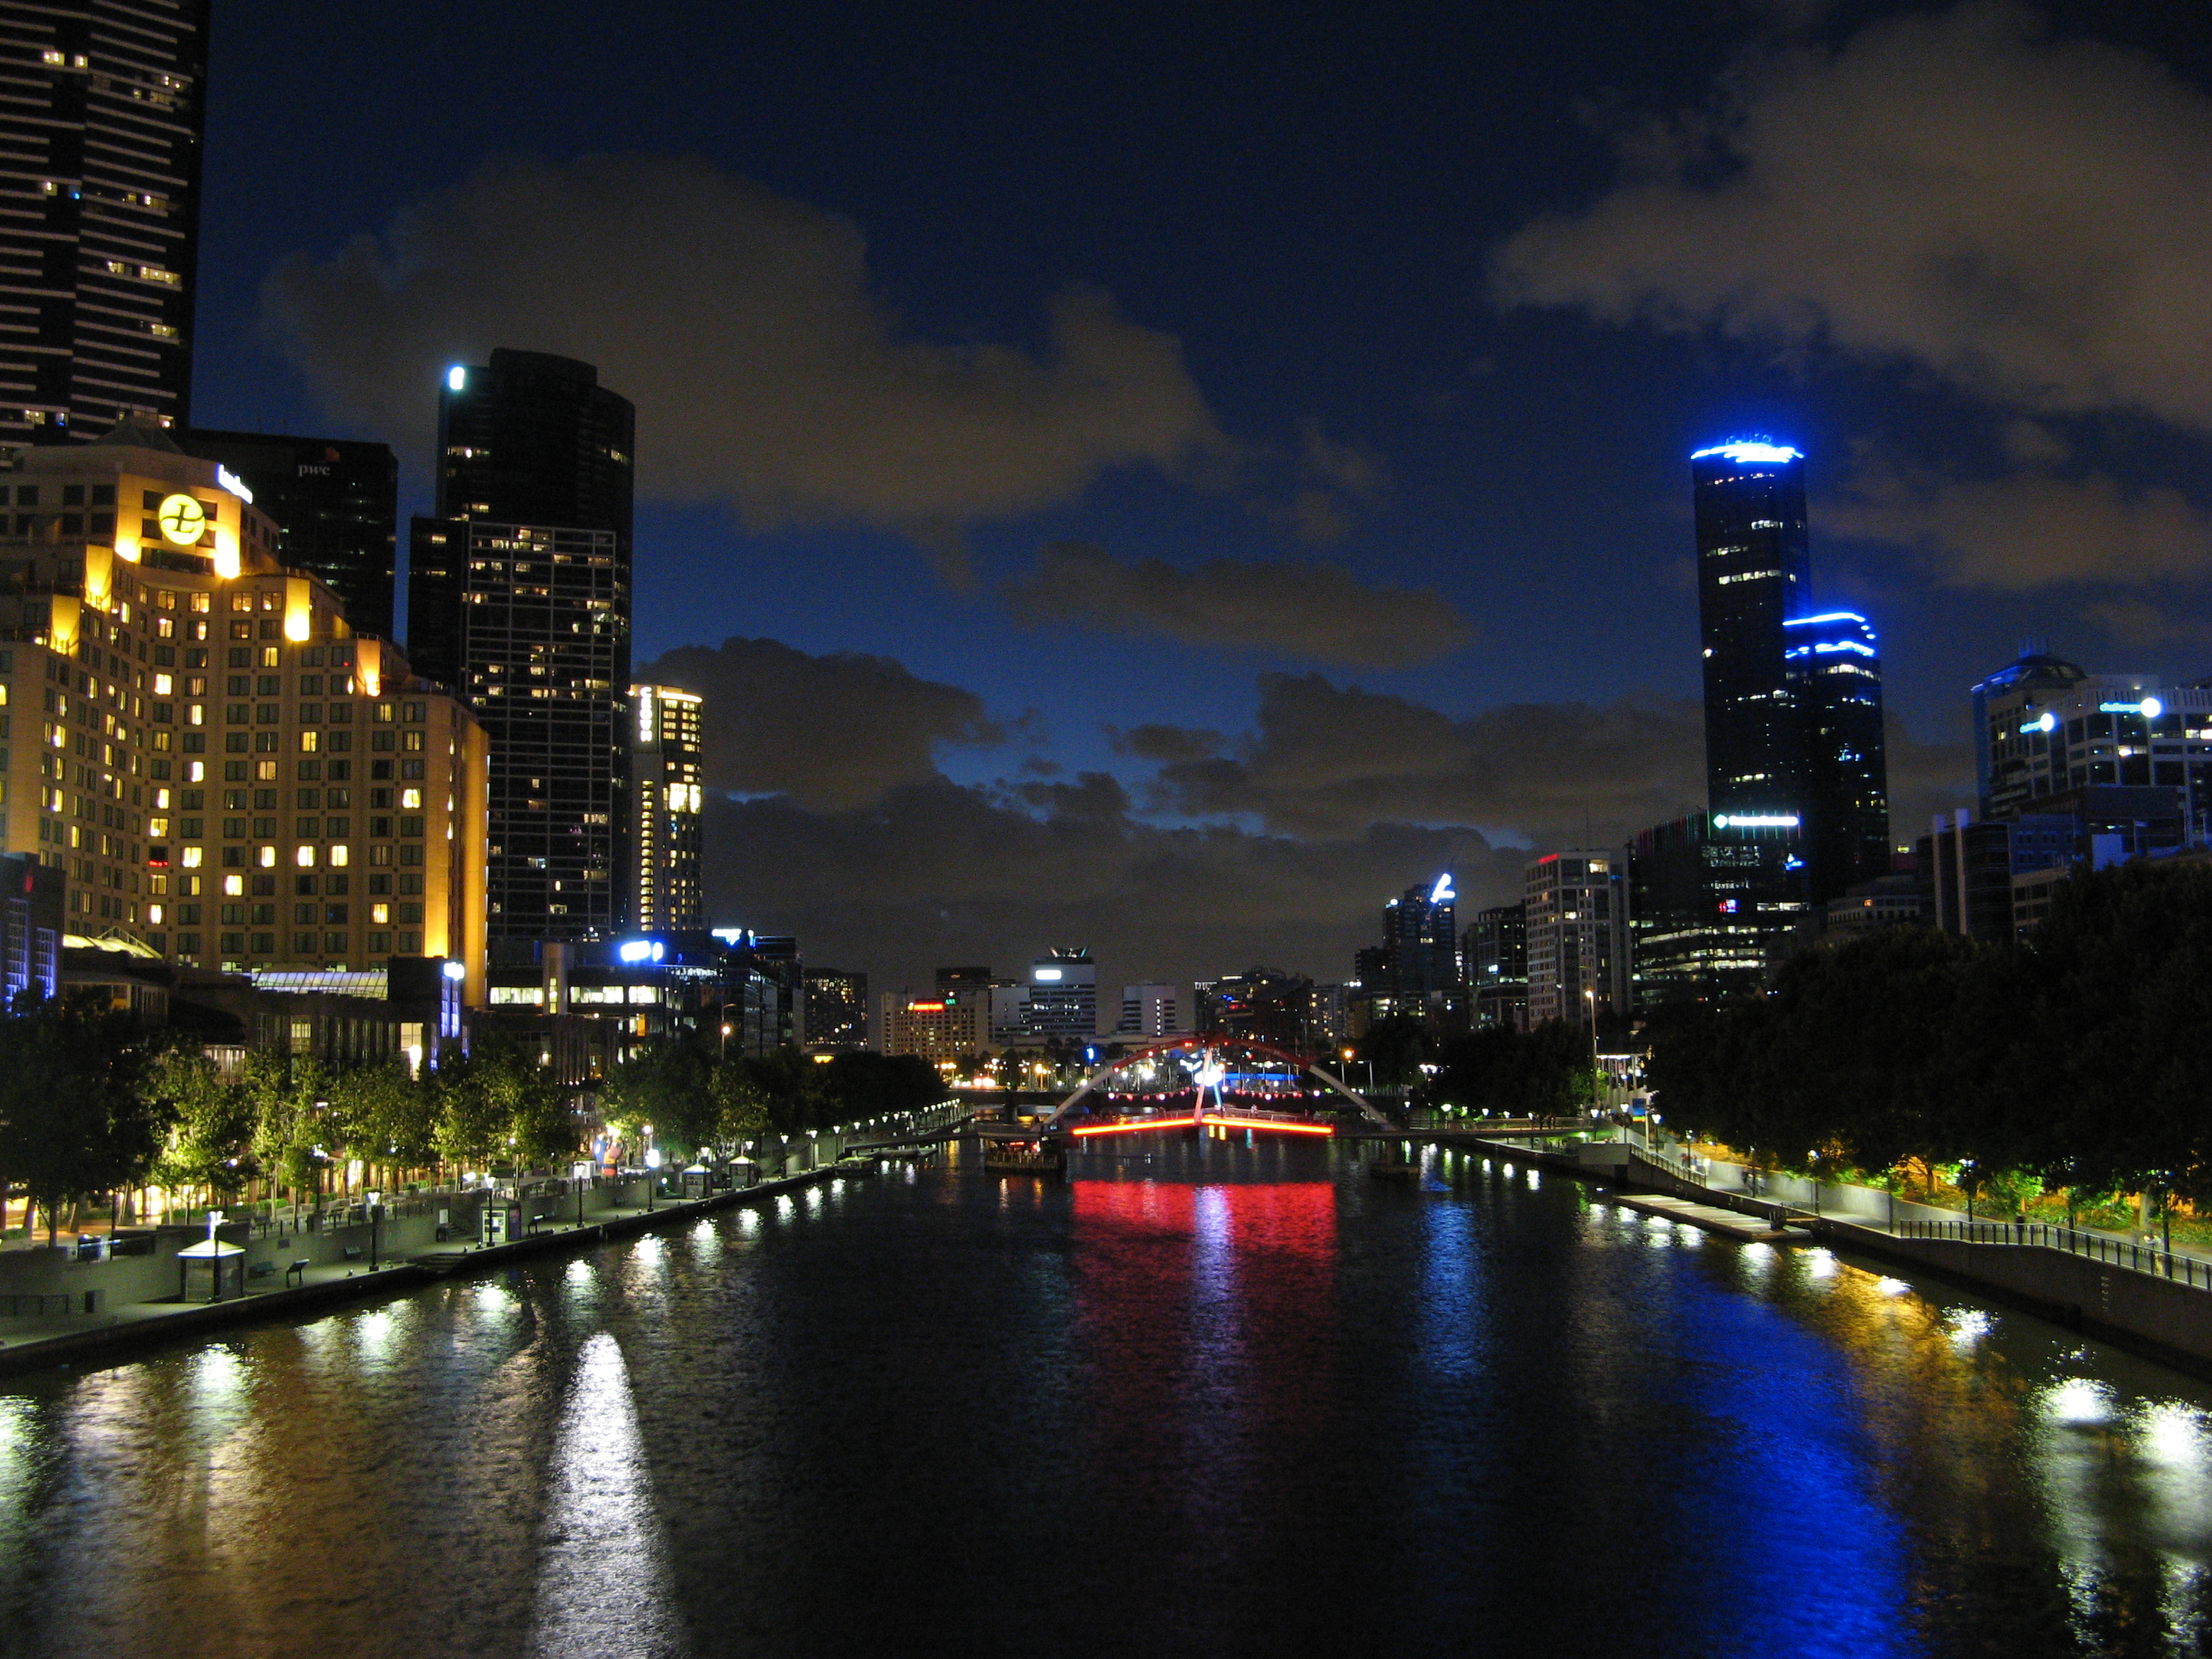 Melbourne city centre